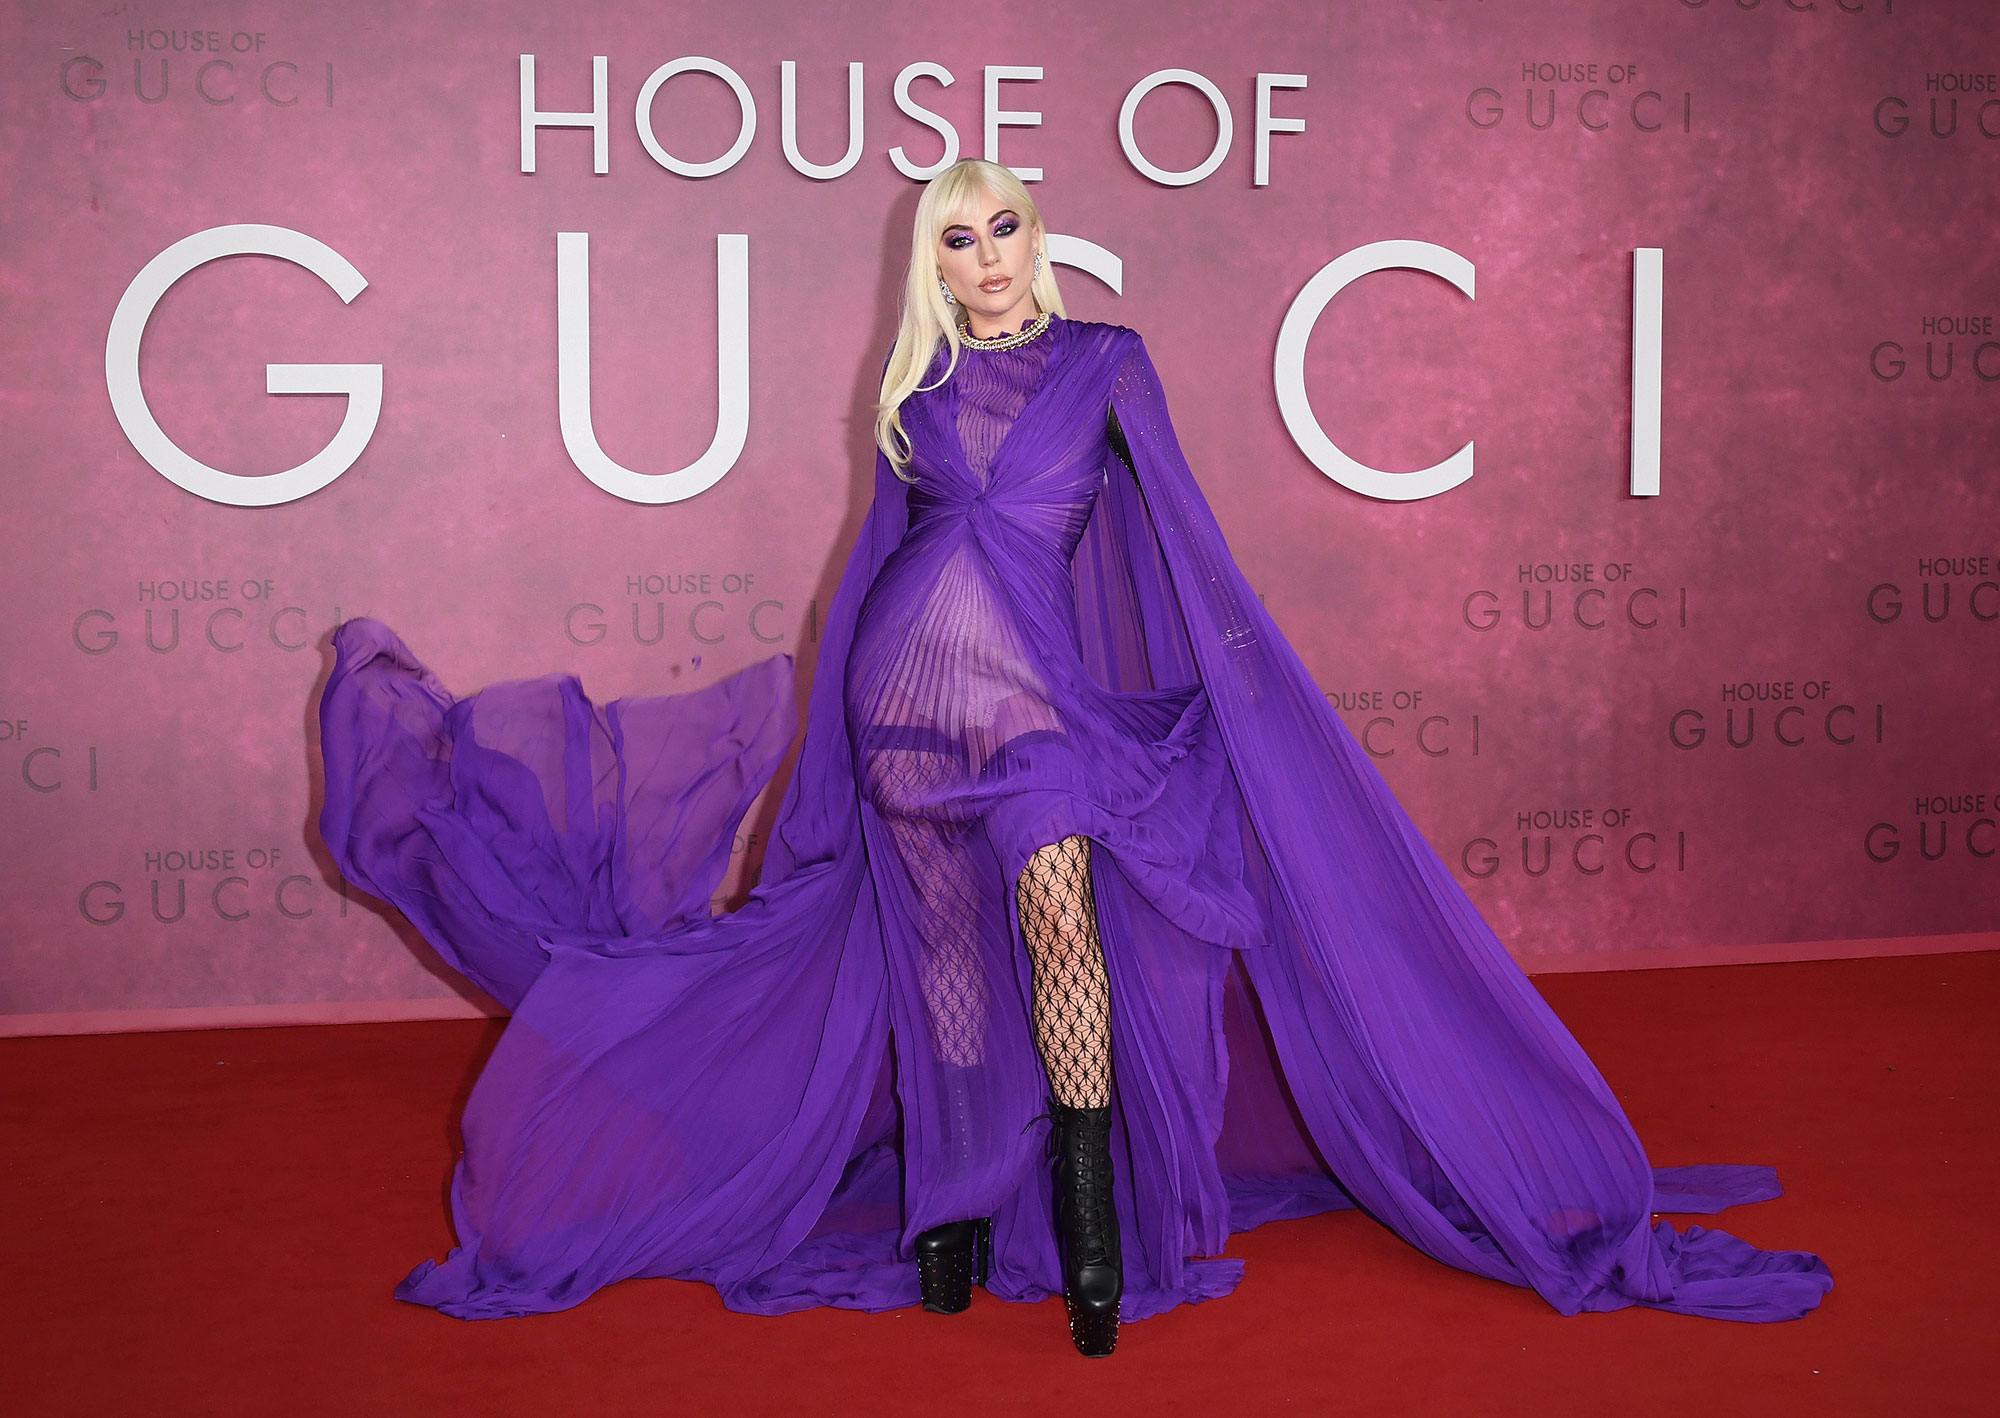 House of Gucci' London Premiere: Lady Gaga's Red Carpet Fashion